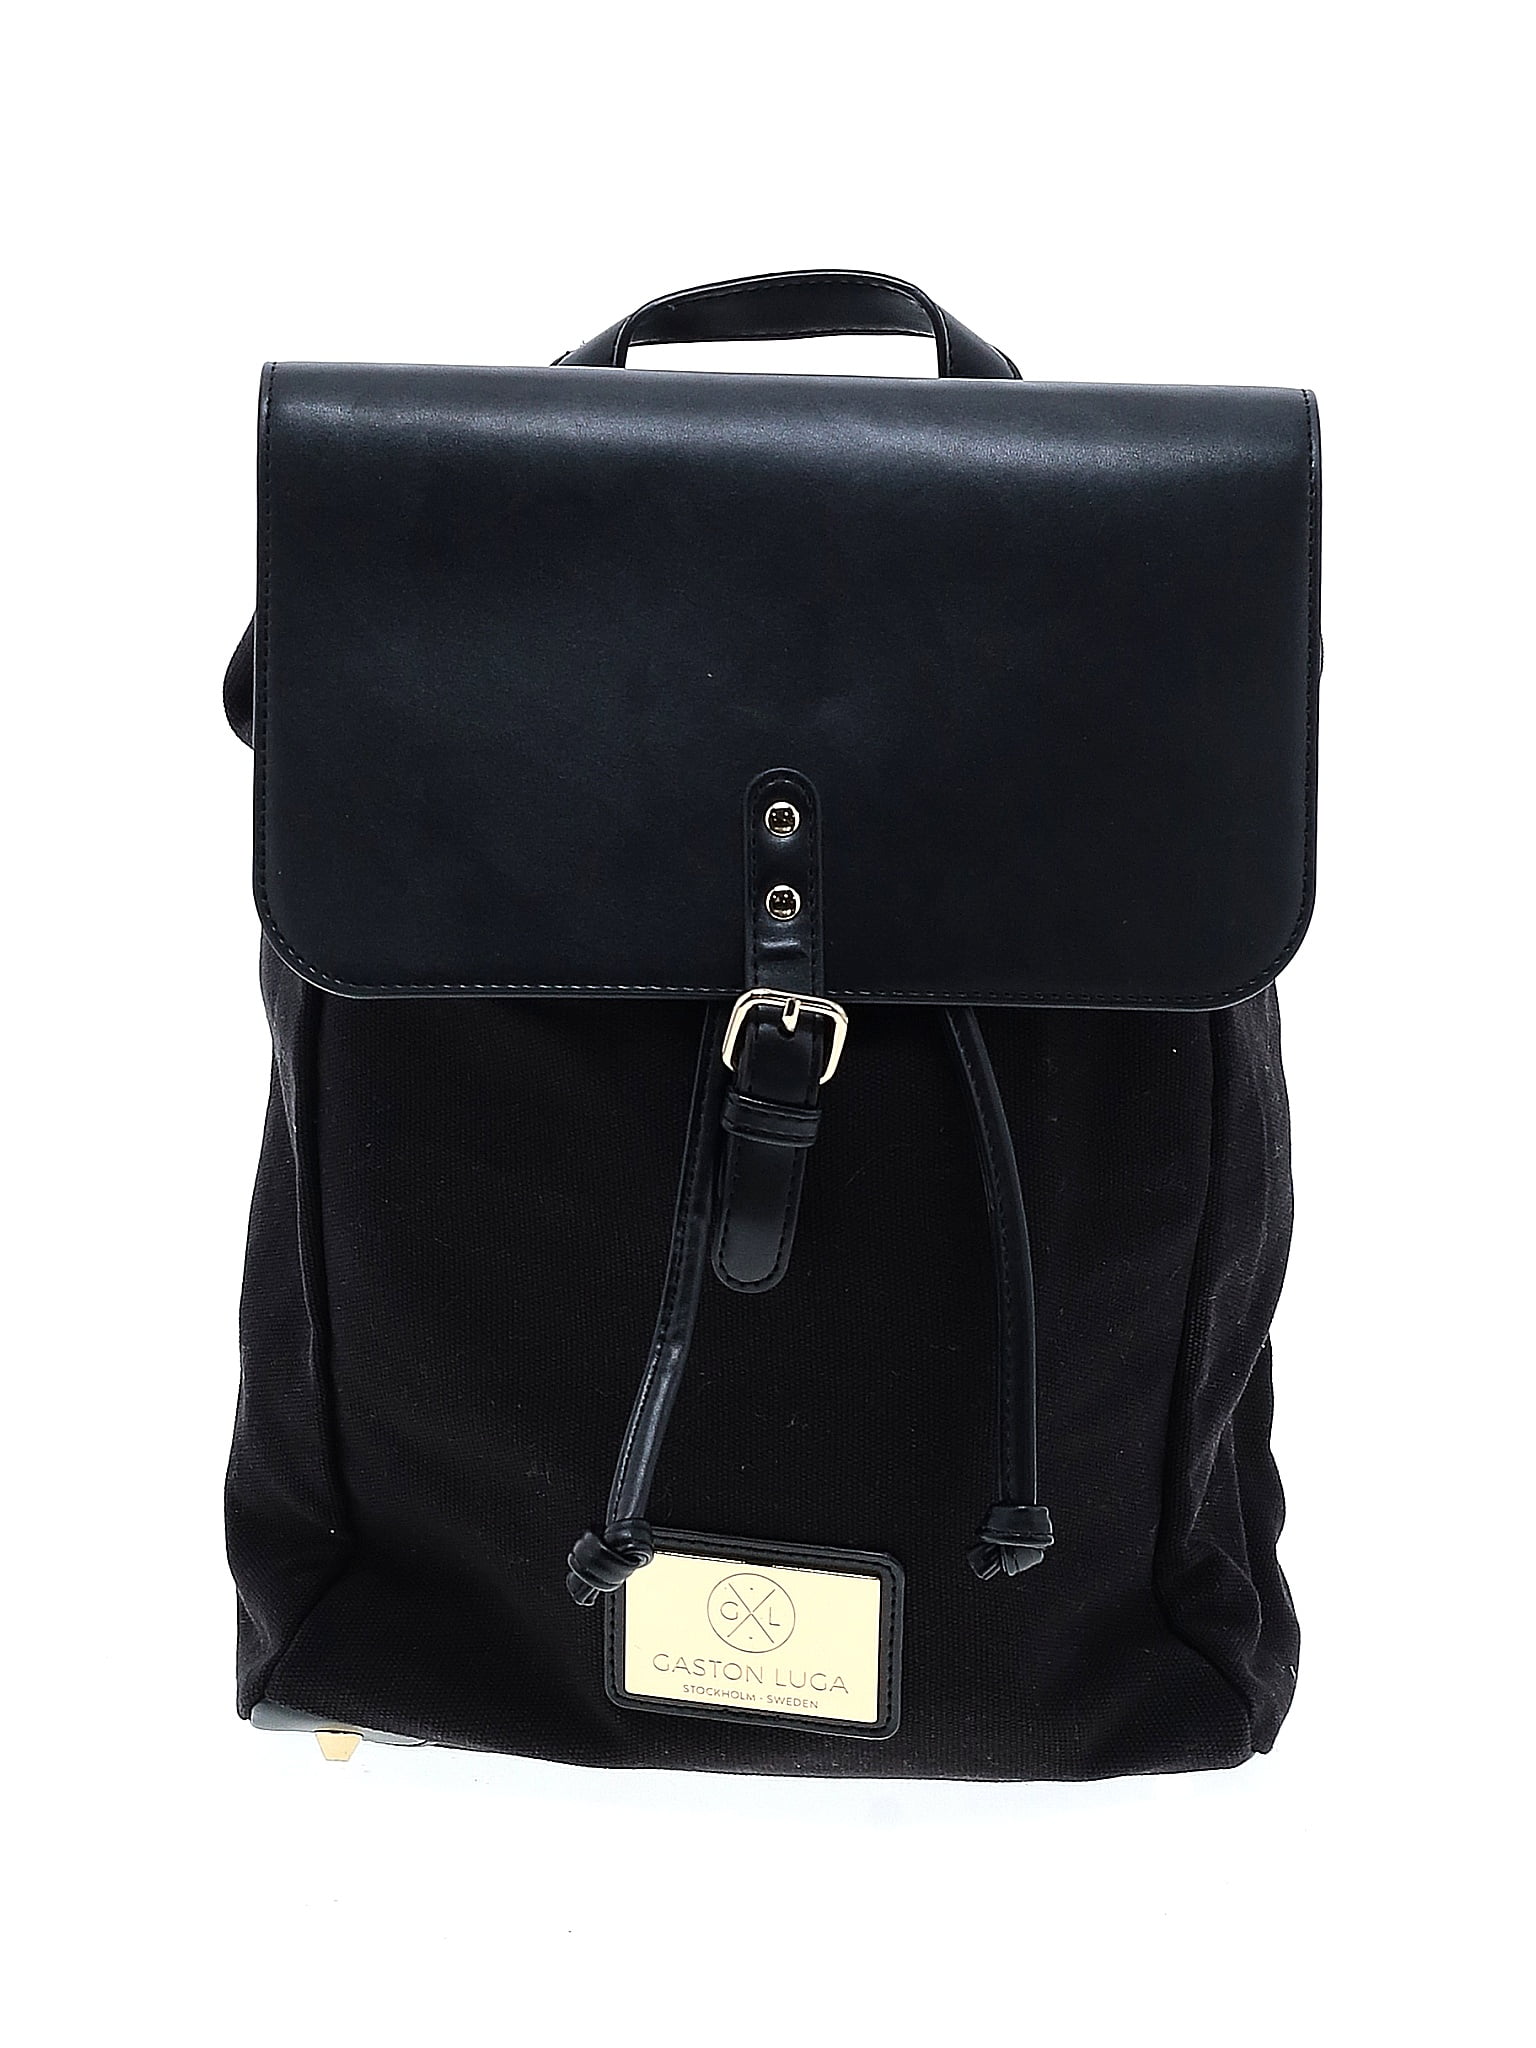 Gaston Luga Solid Black Backpack One Size - 59% off